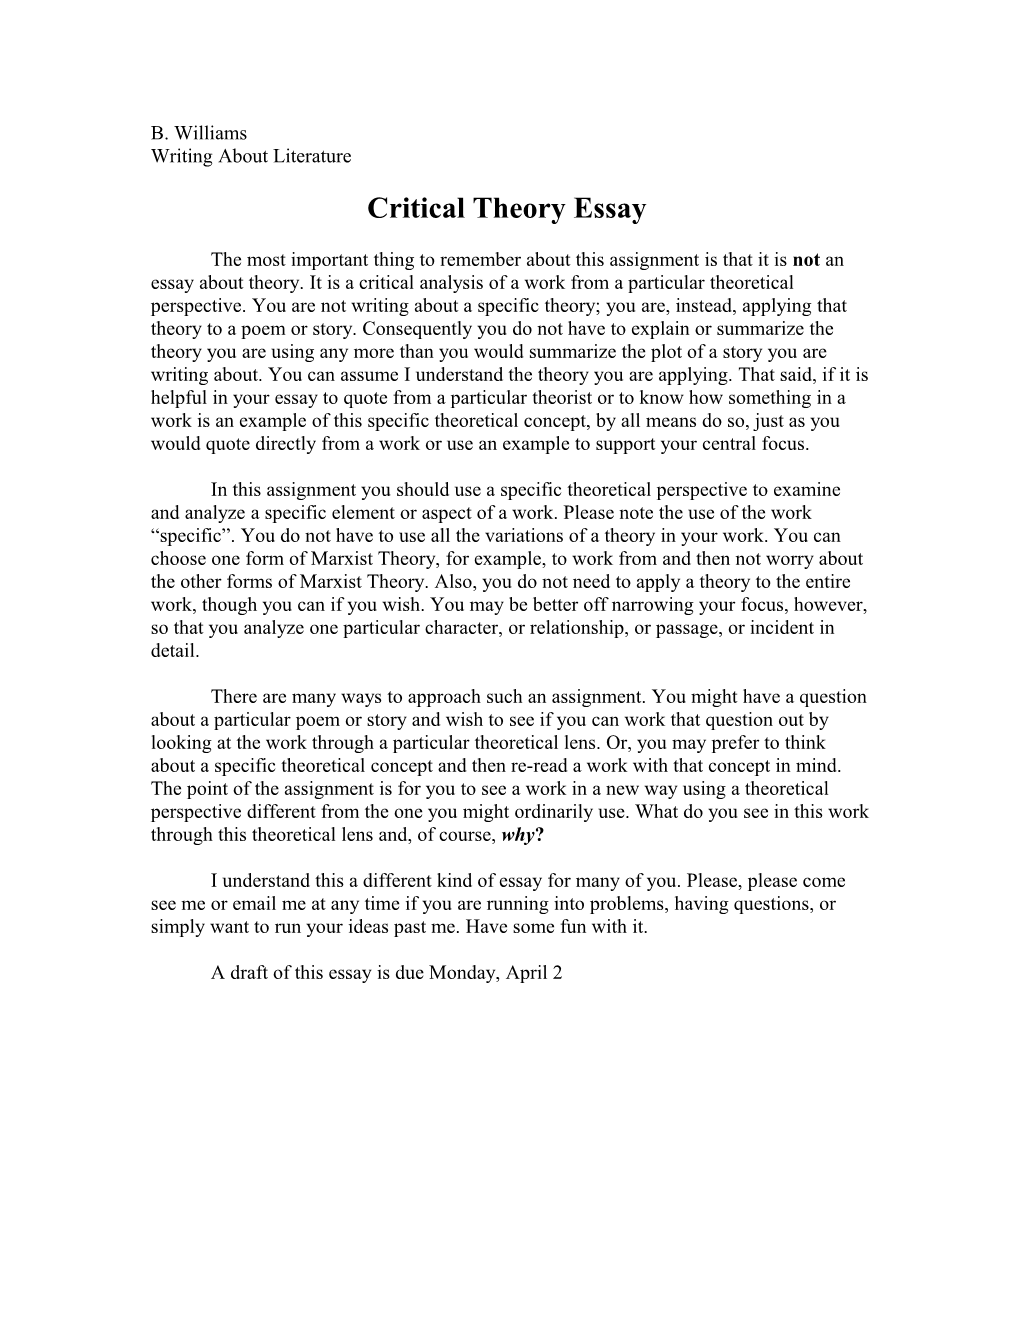 Critical Theory Essay